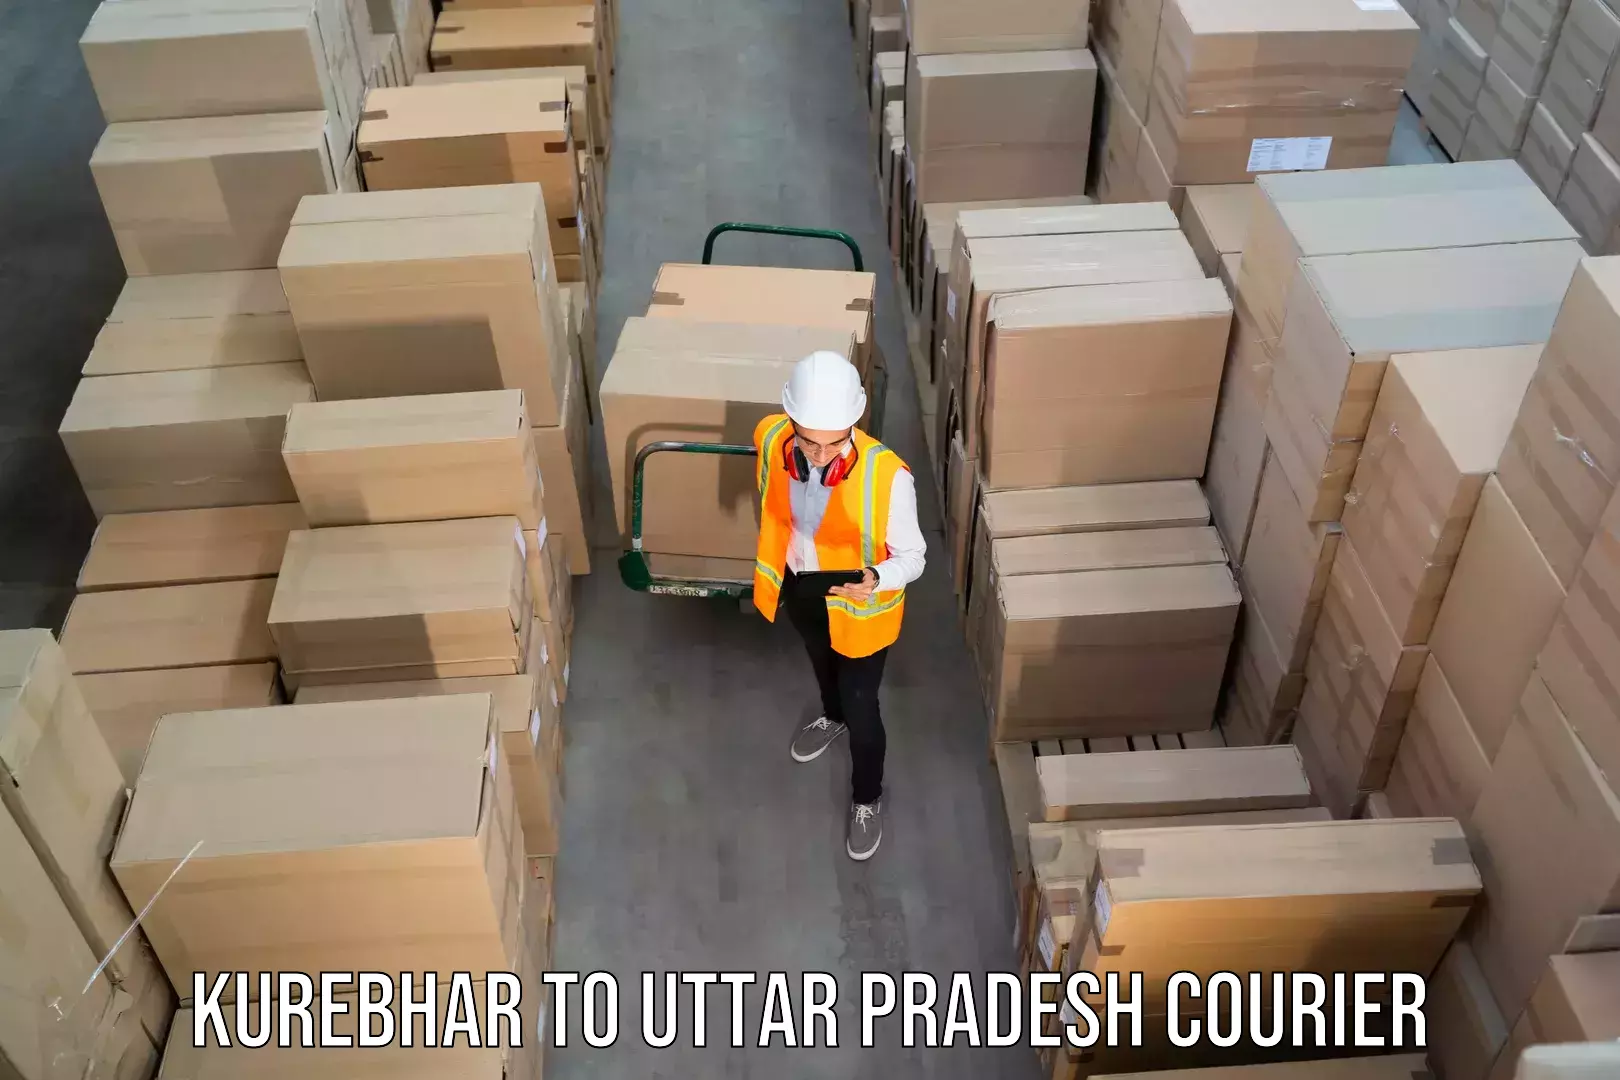 Premium courier services Kurebhar to Noida